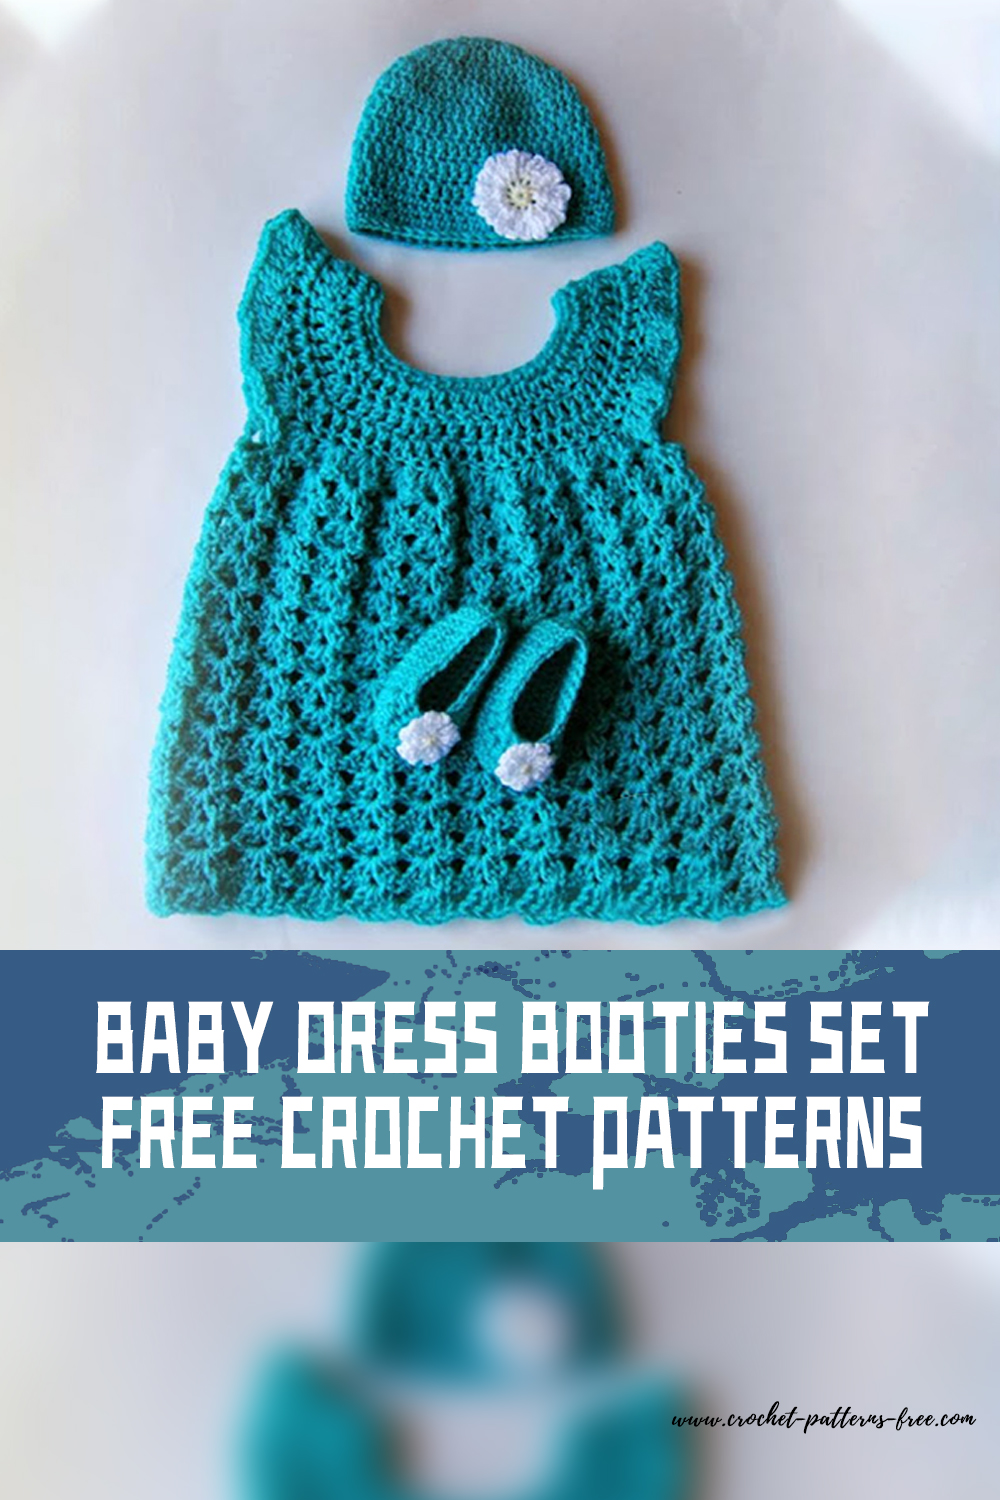 Crochet Baby Dress Booties Set - FREE Patterns